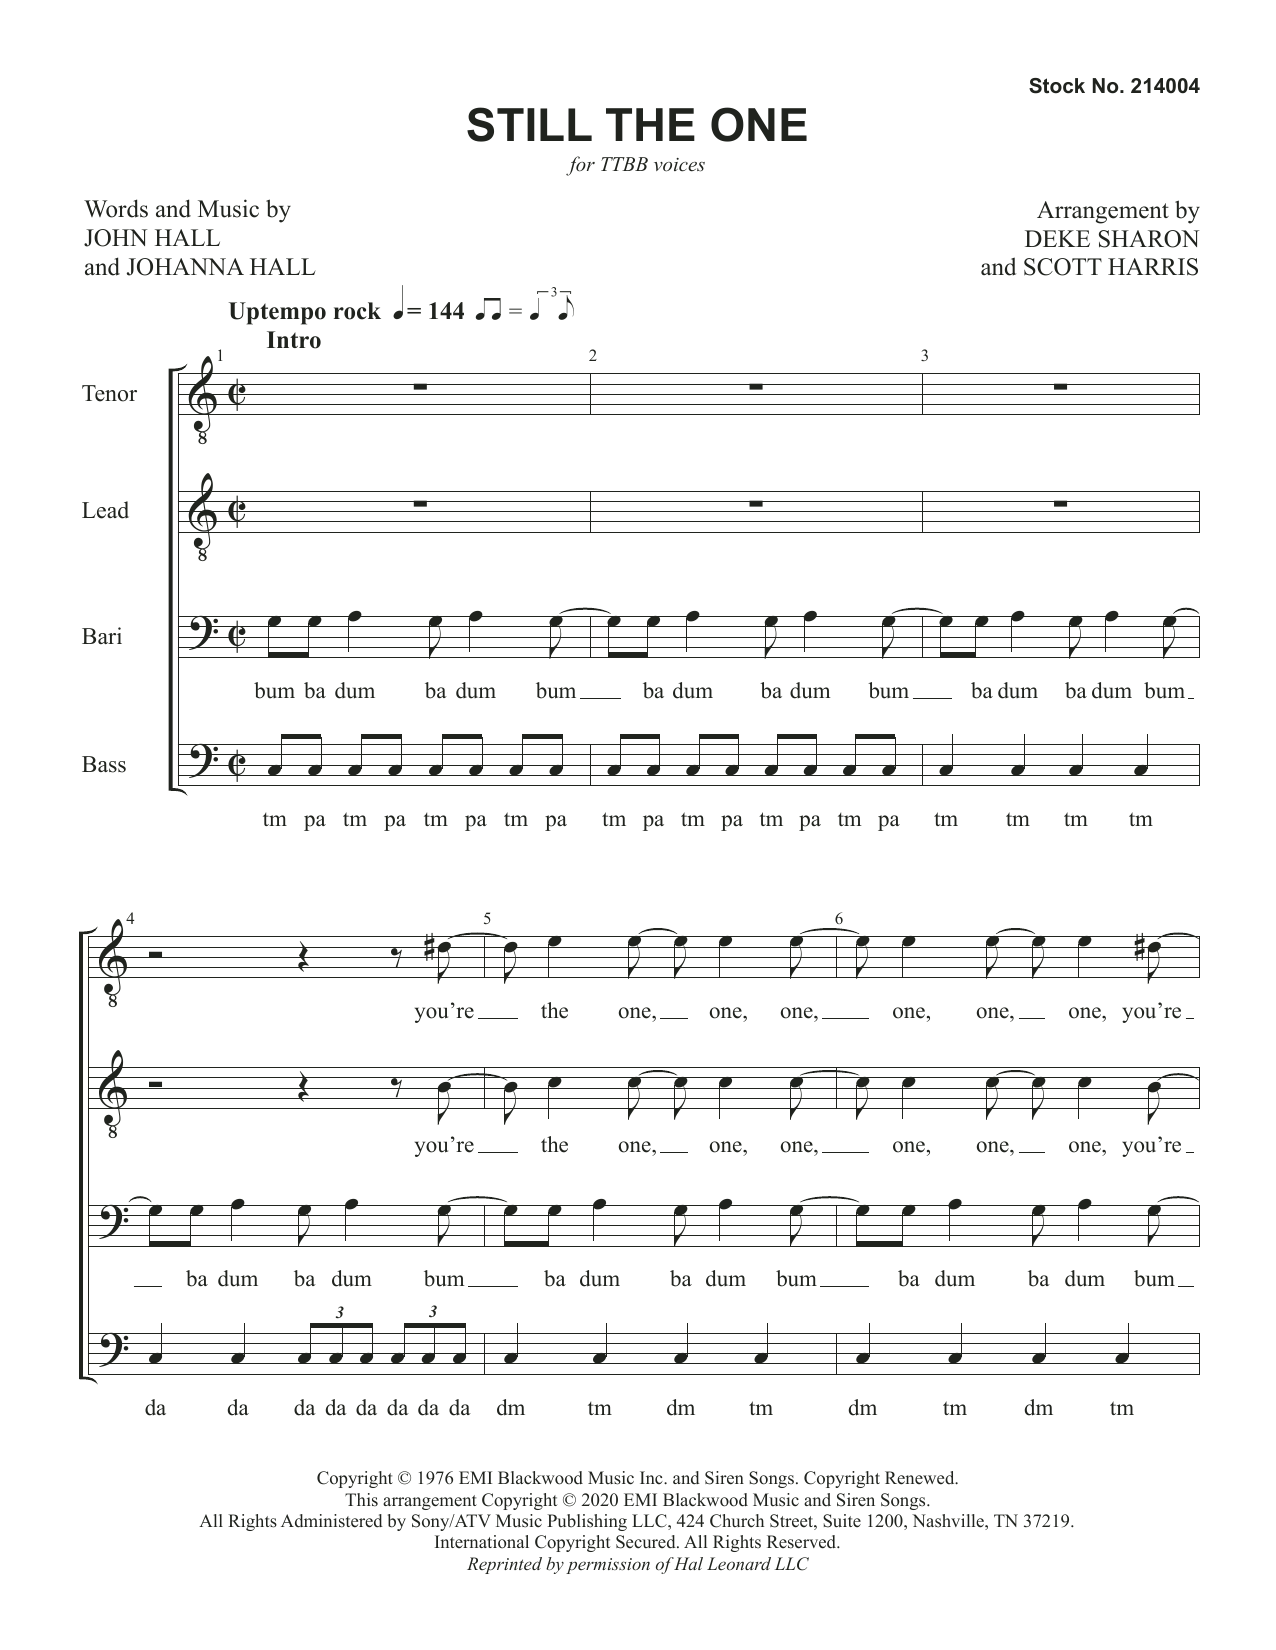 John Hall & Johanna Hall Still The One (arr. Deke Sharon & Scott Harris) Sheet Music Notes & Chords for SATB Choir - Download or Print PDF